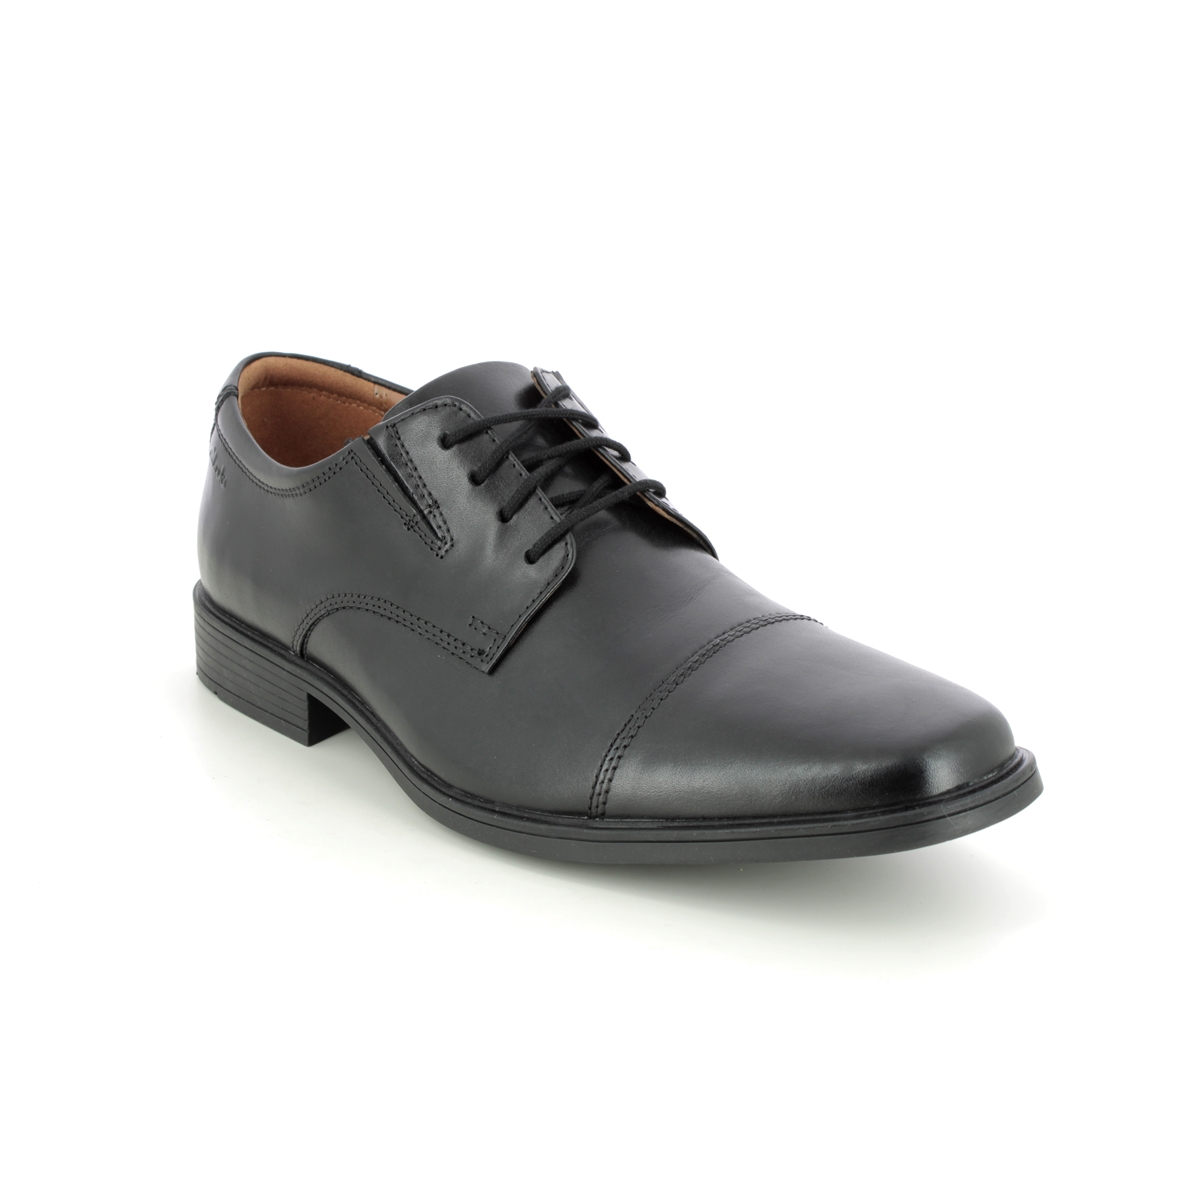 Clarks Tilden Cap Black Leather Mens Formal Shoes 103097G In Size 9.5 In Plain Black Leather G Width Fitting